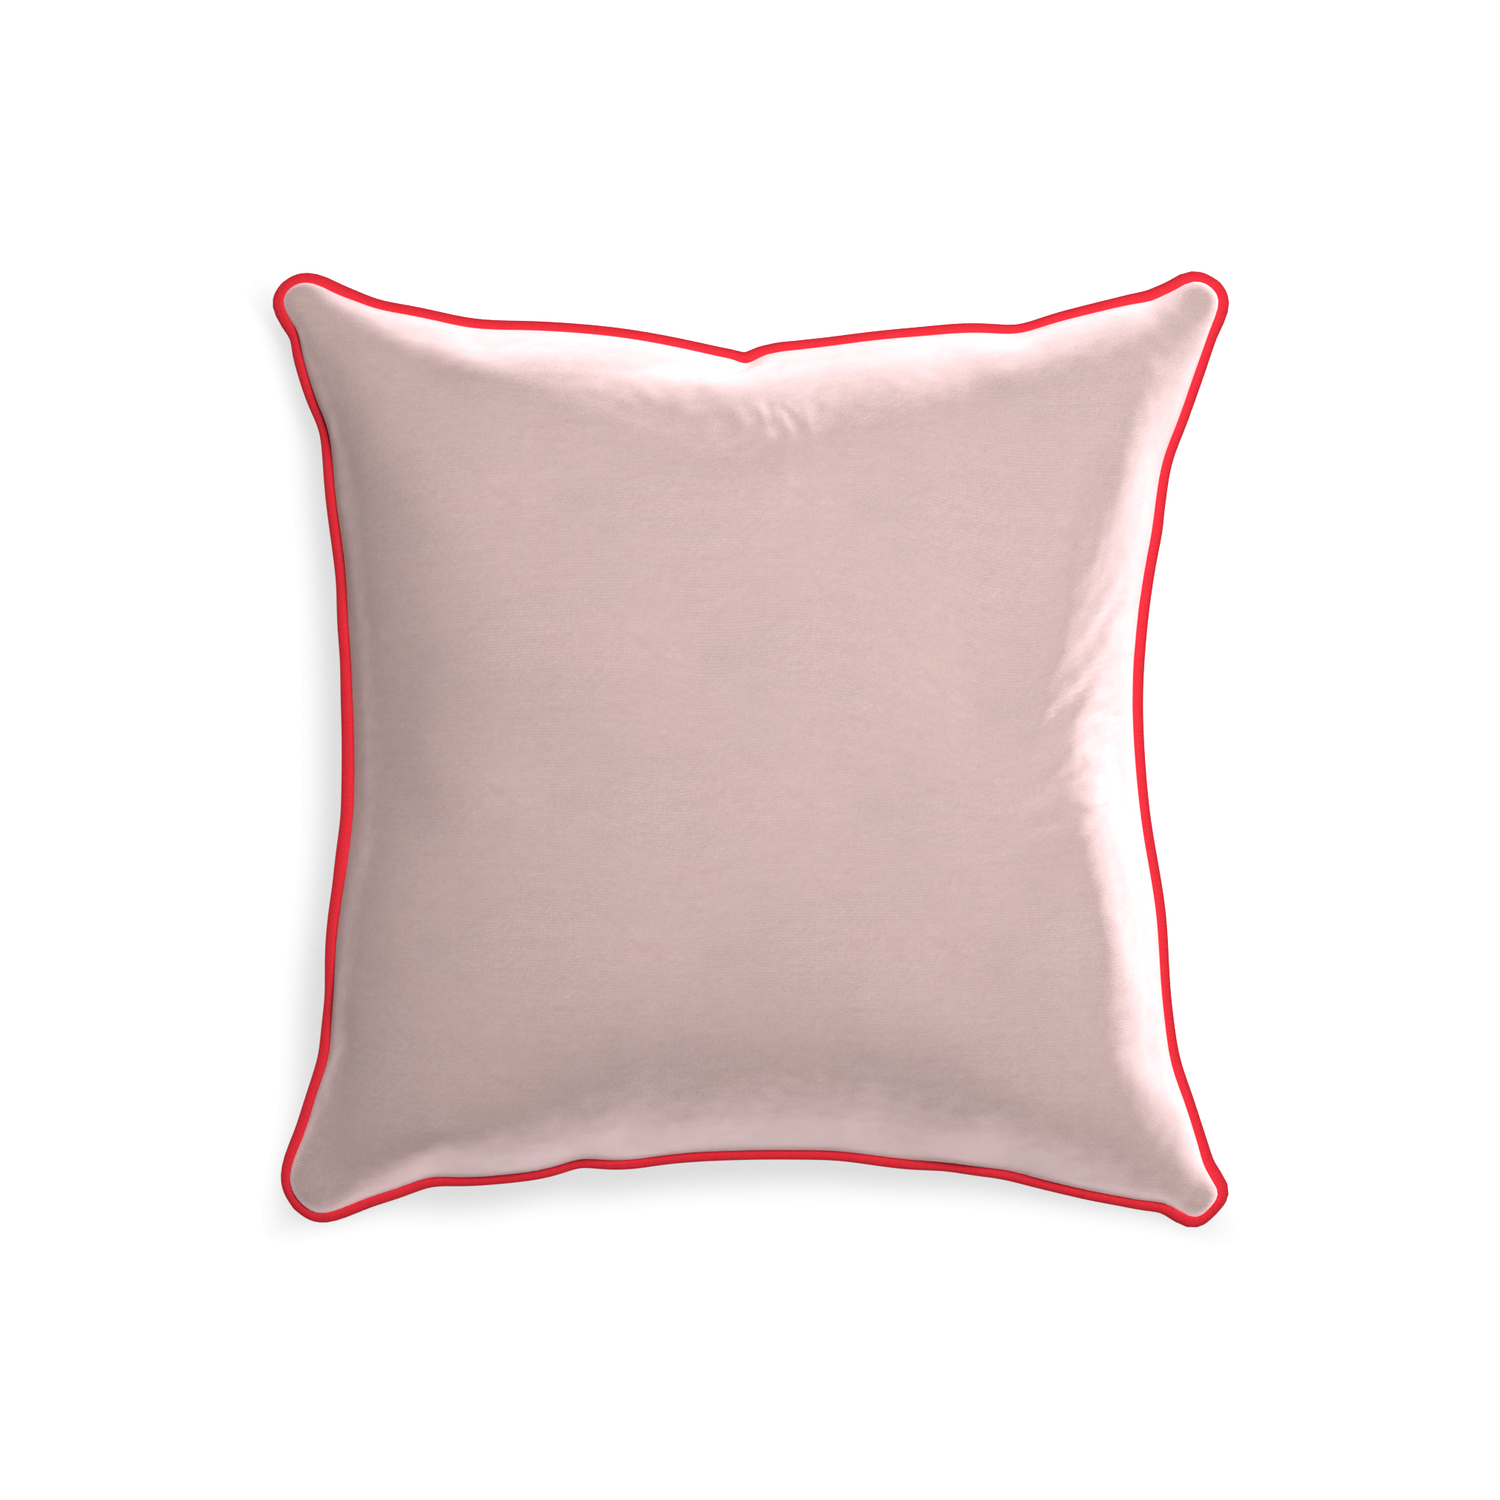 20-square rose velvet custom pillow with cherry piping on white background